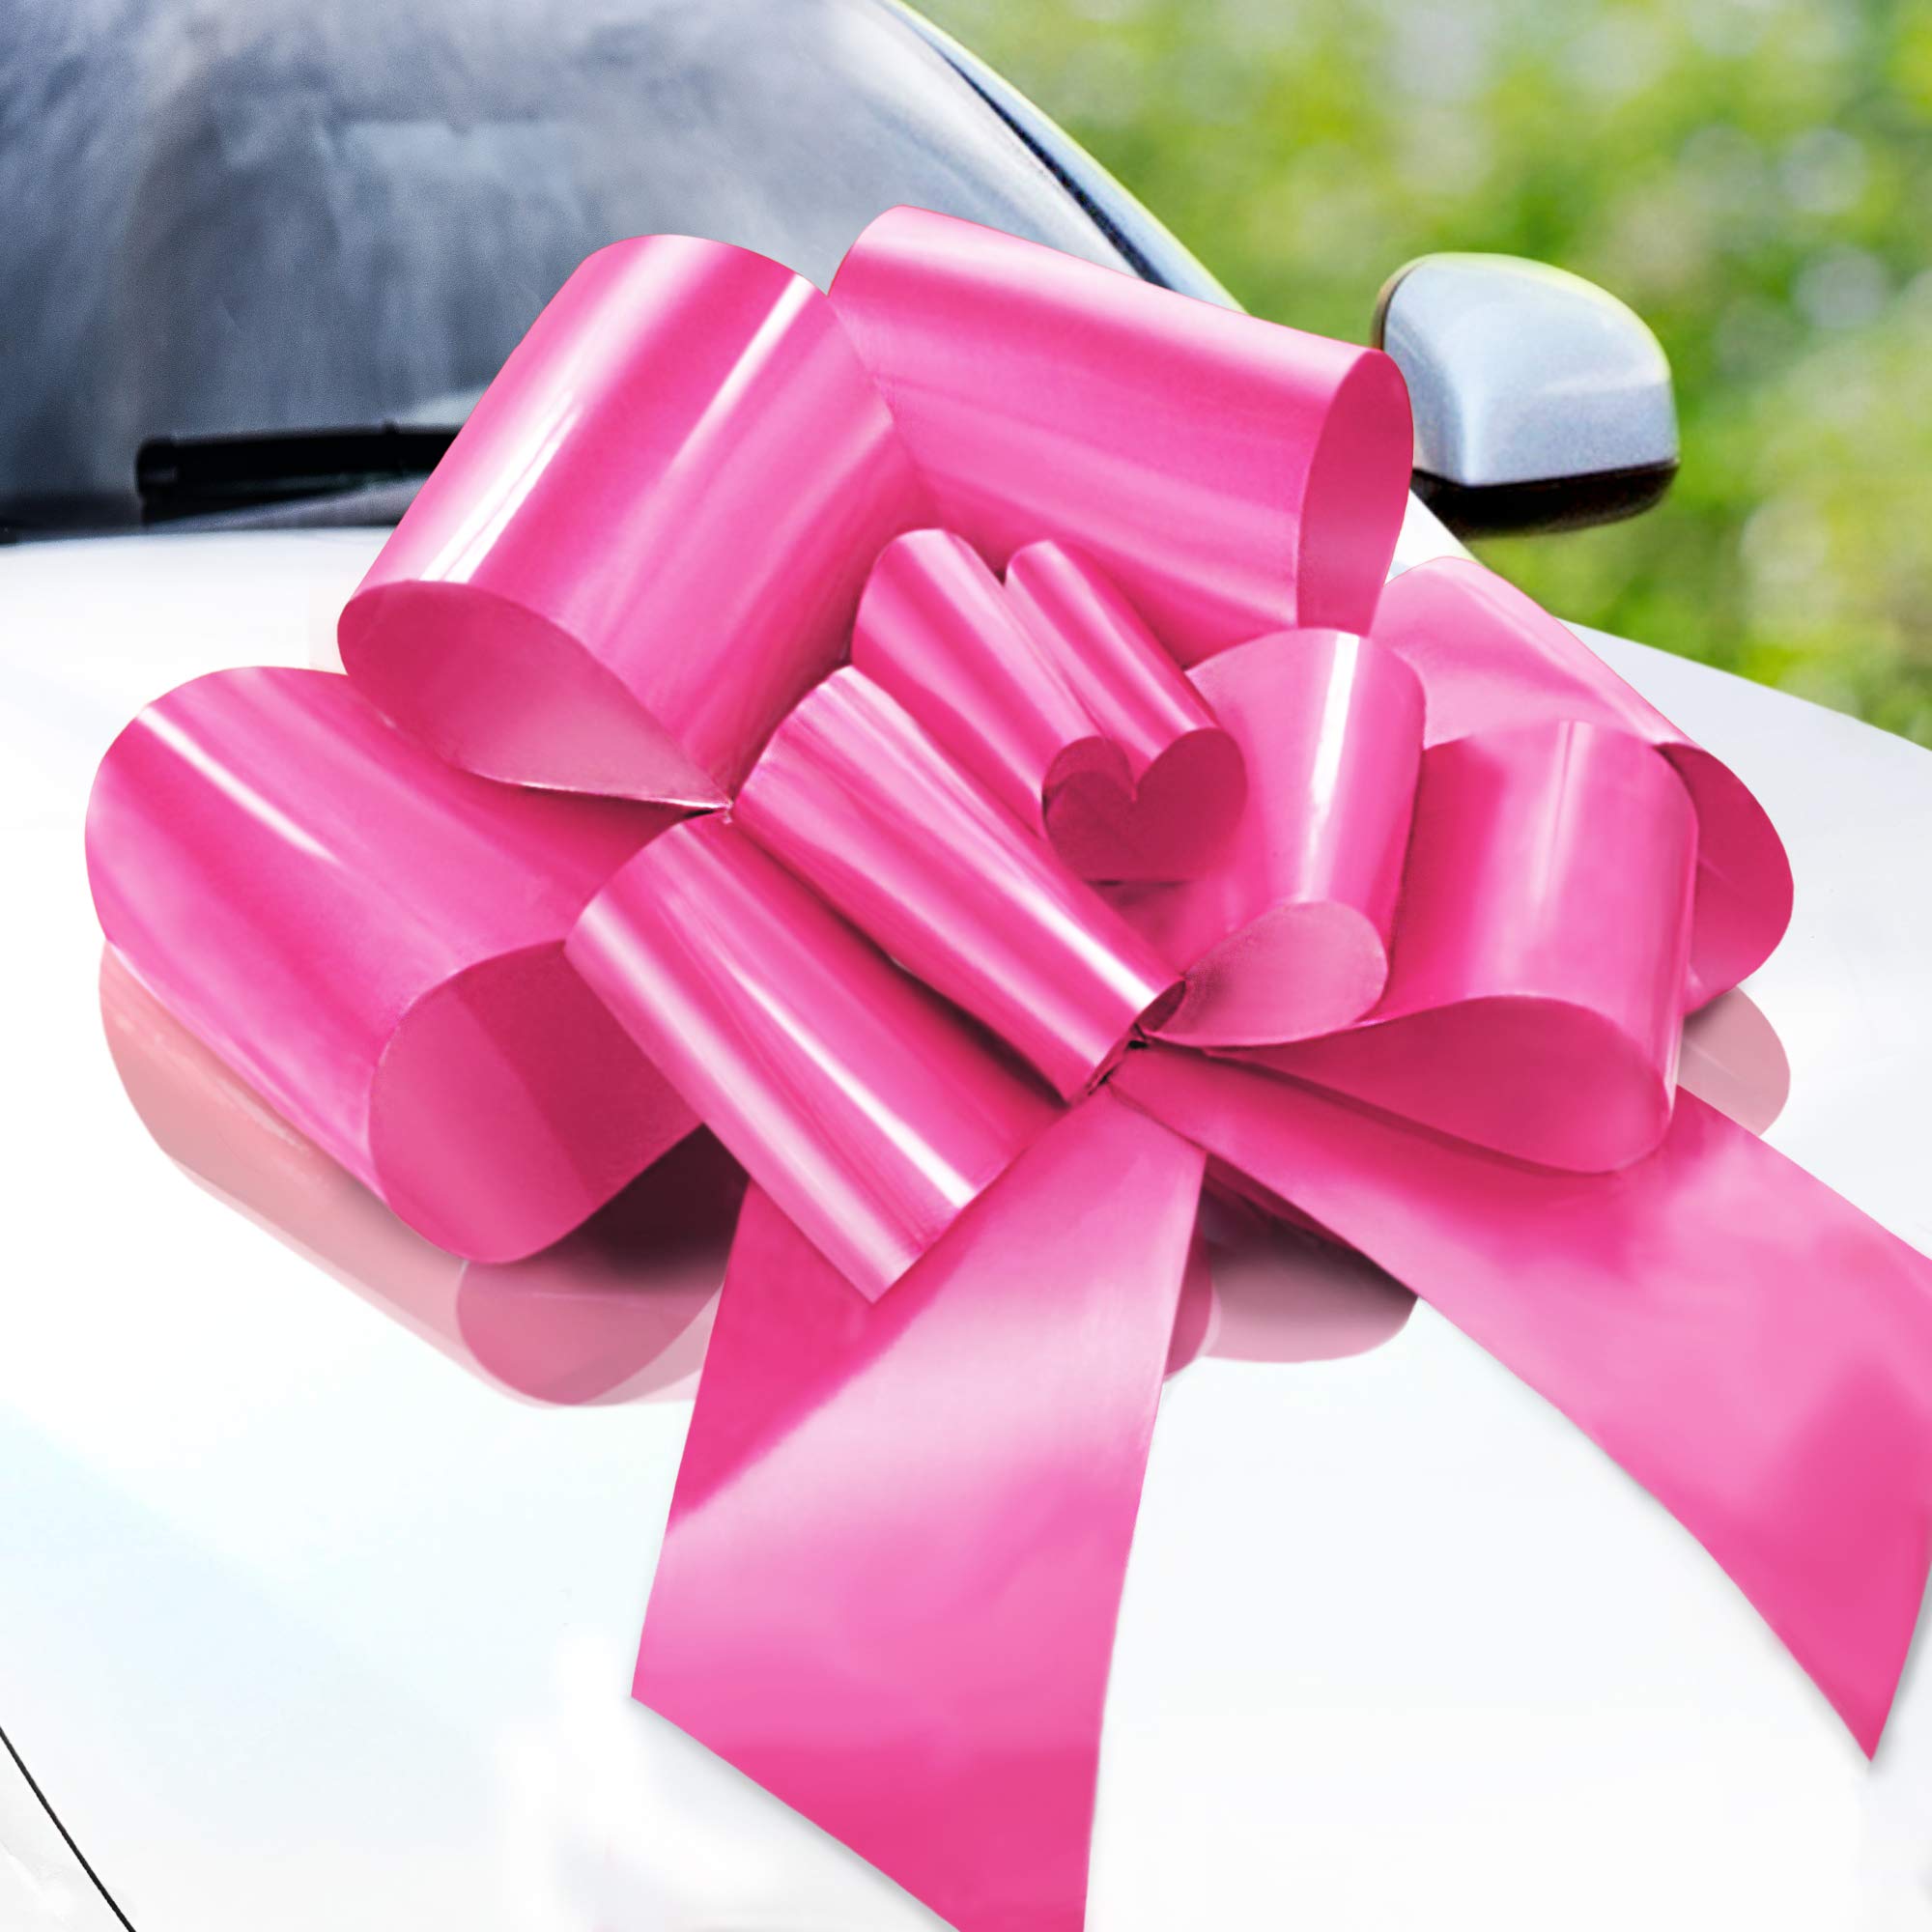 Deco 23 inch Giant Pink Car Gift (US Company) - Walmart.com